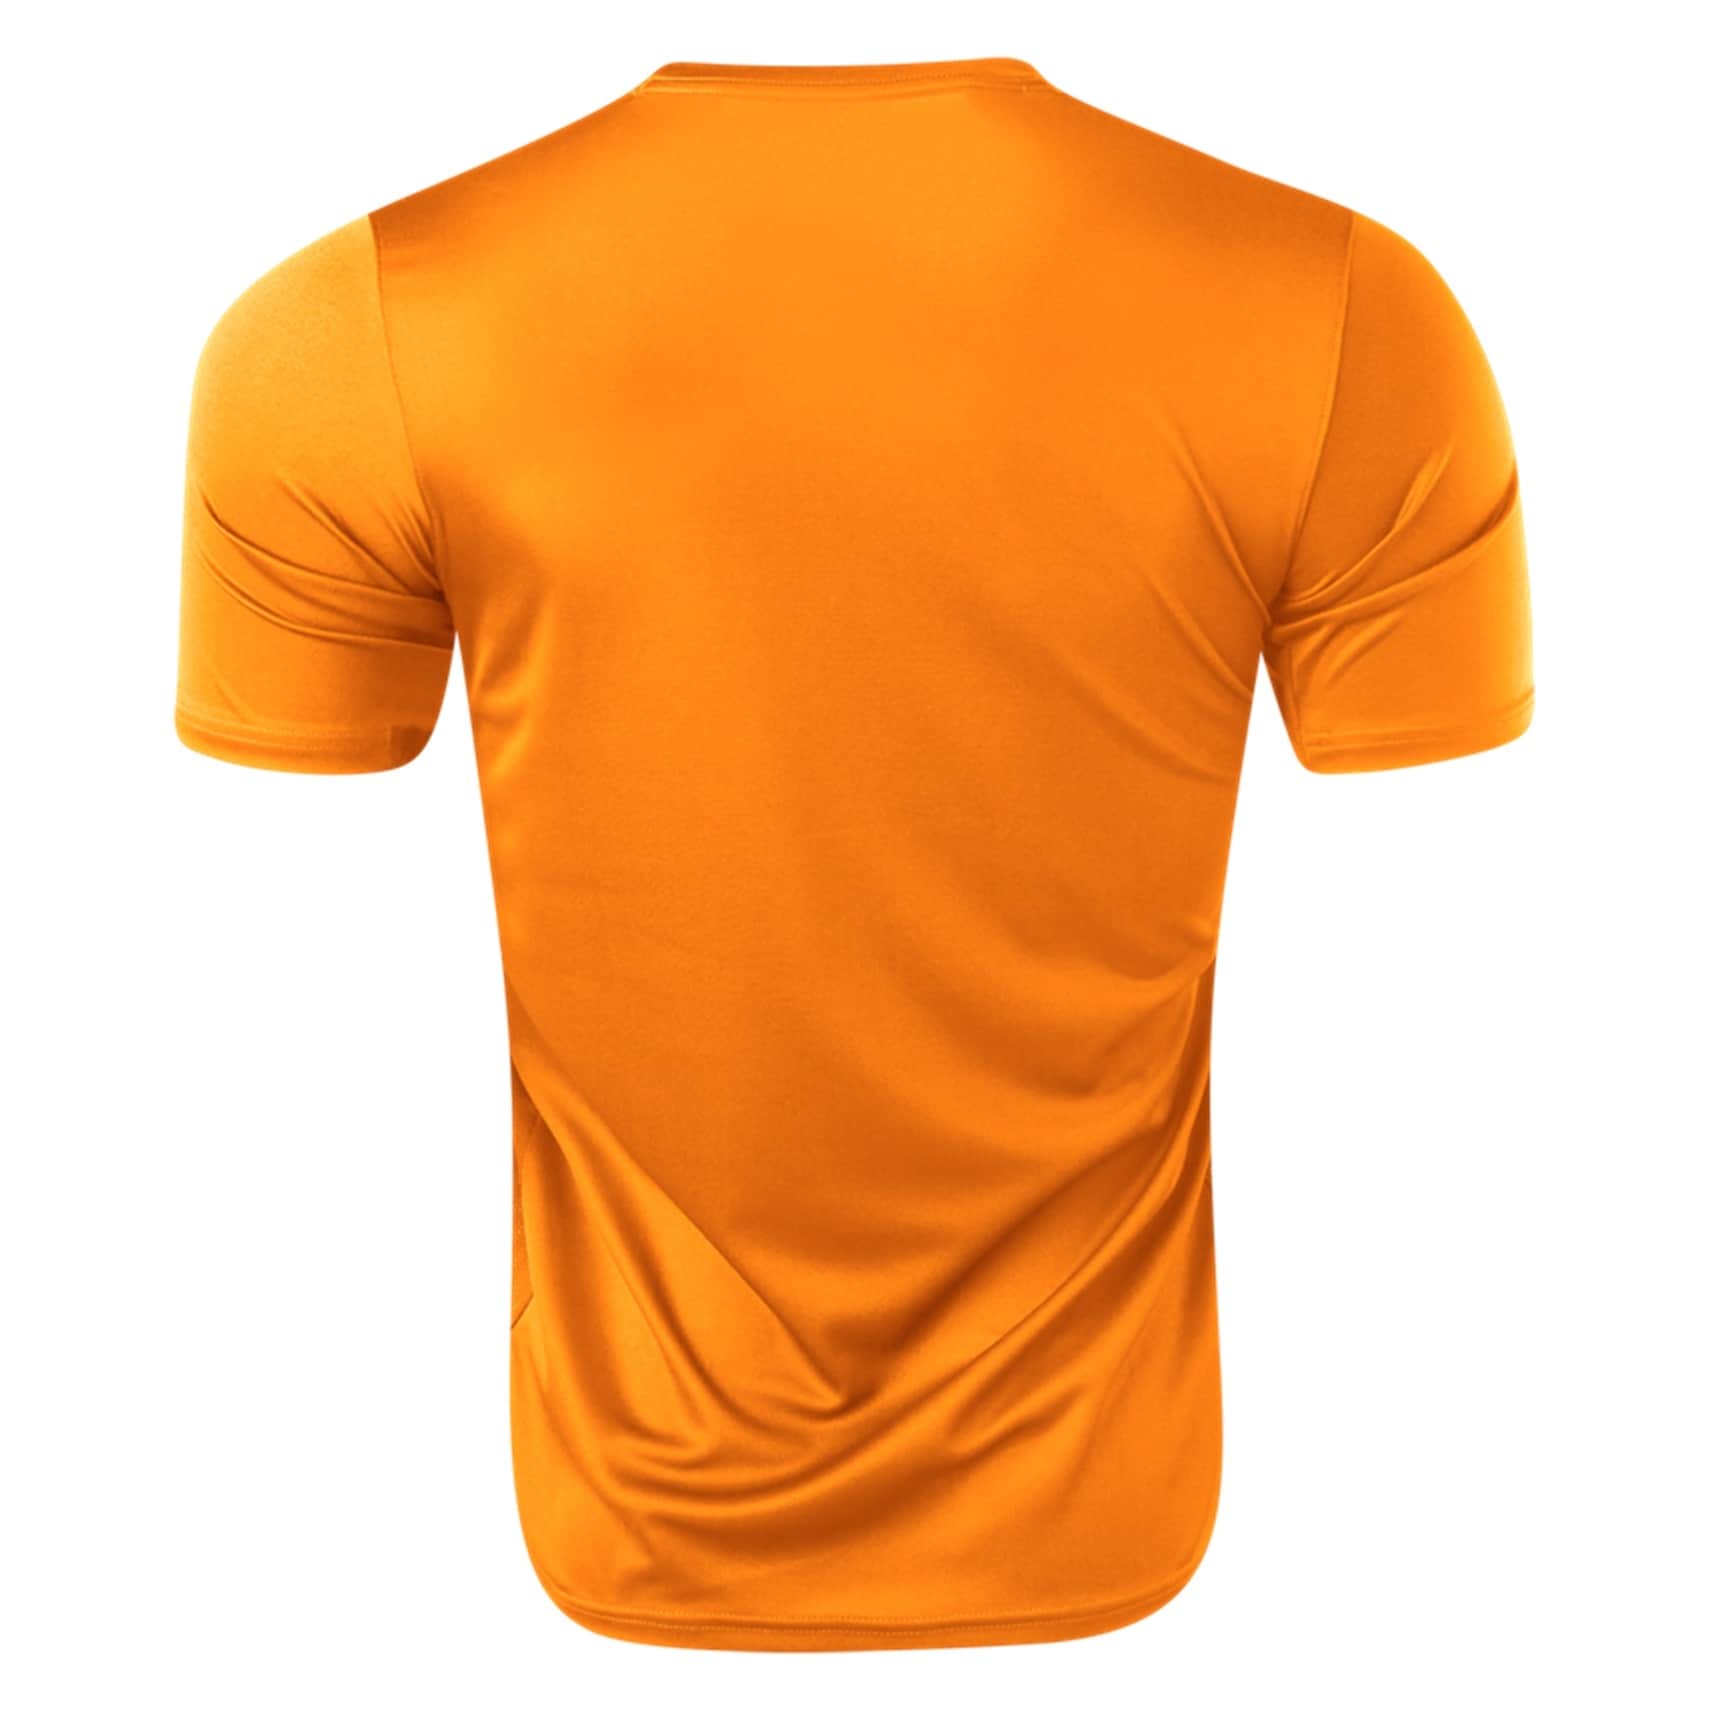 nike orange soccer jersey